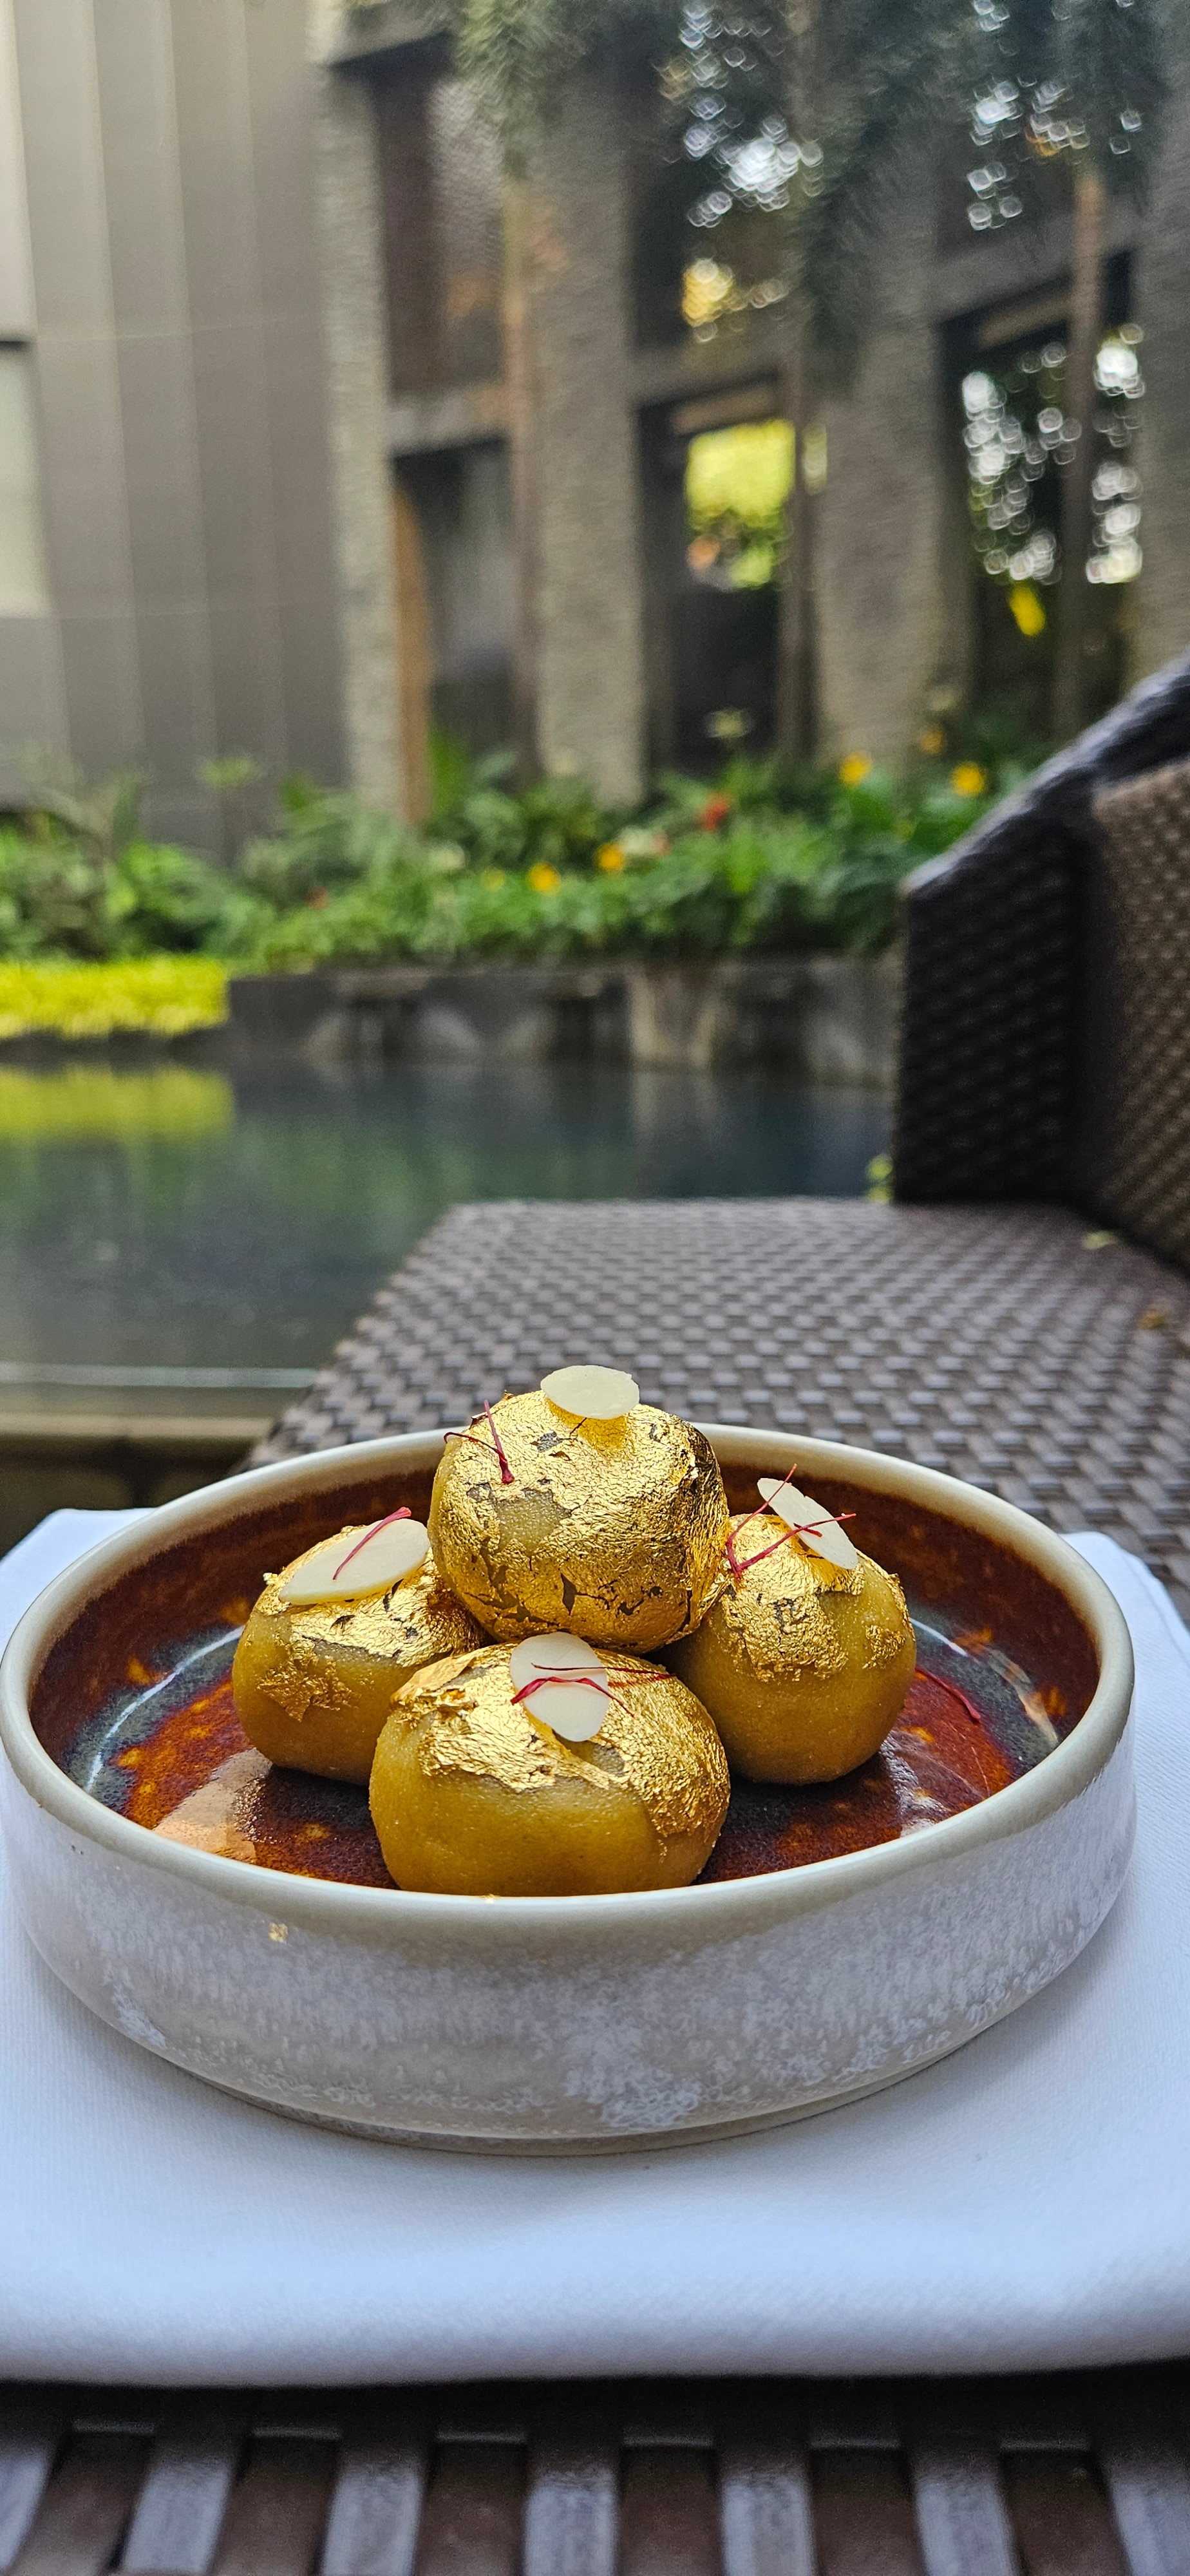 24 Carot Gold Besan Laddoo (By Prabhjeet Singh Lehal, Chef De Cuisine, Conrad Pune)